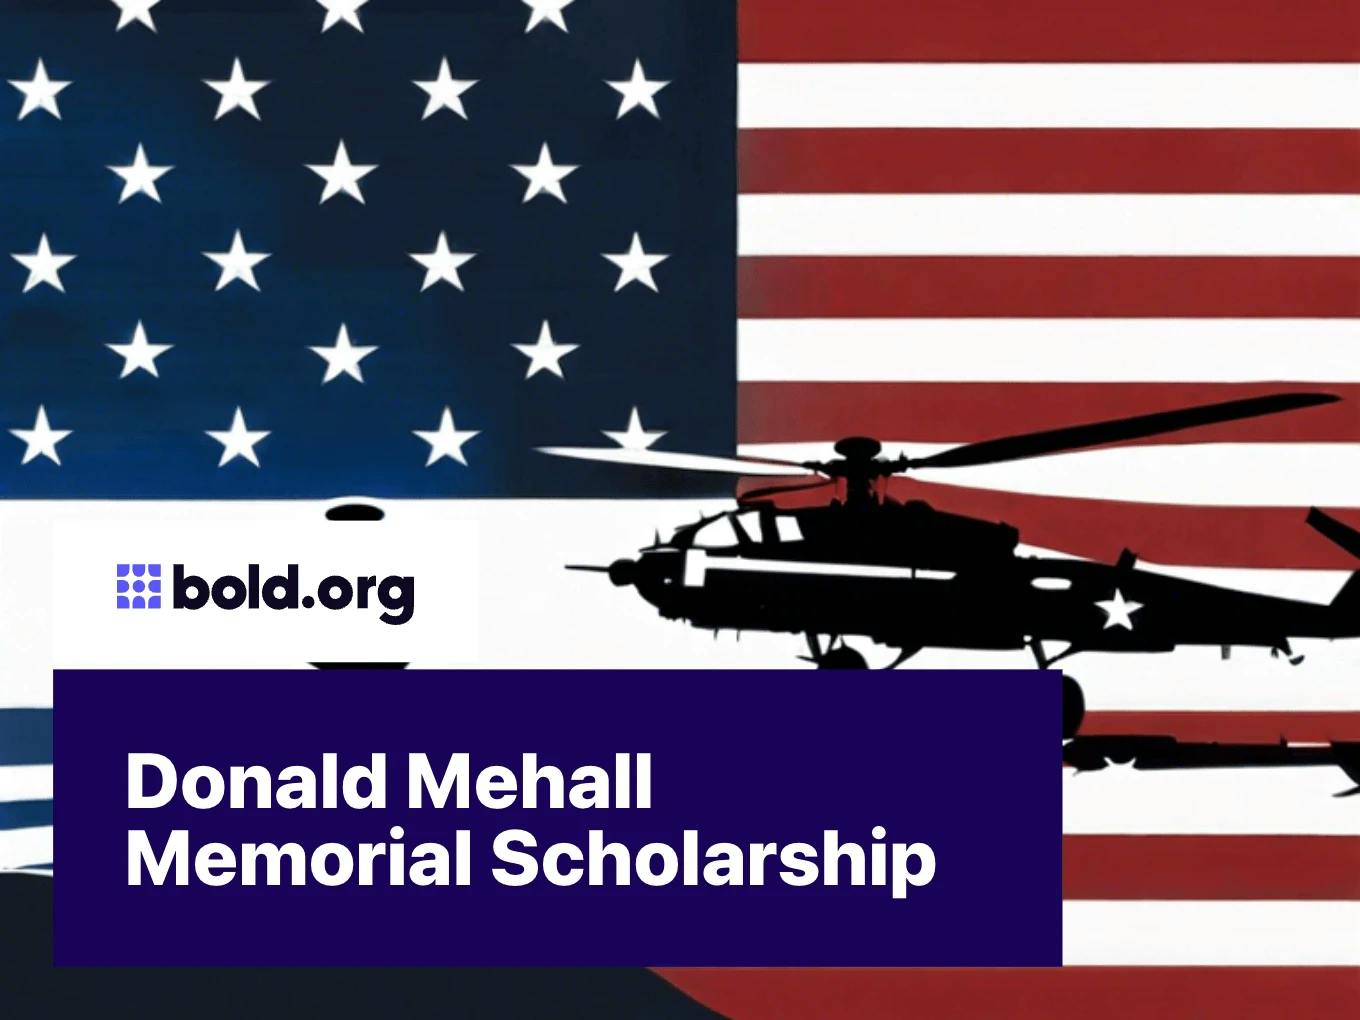 Donald Mehall Memorial Scholarship